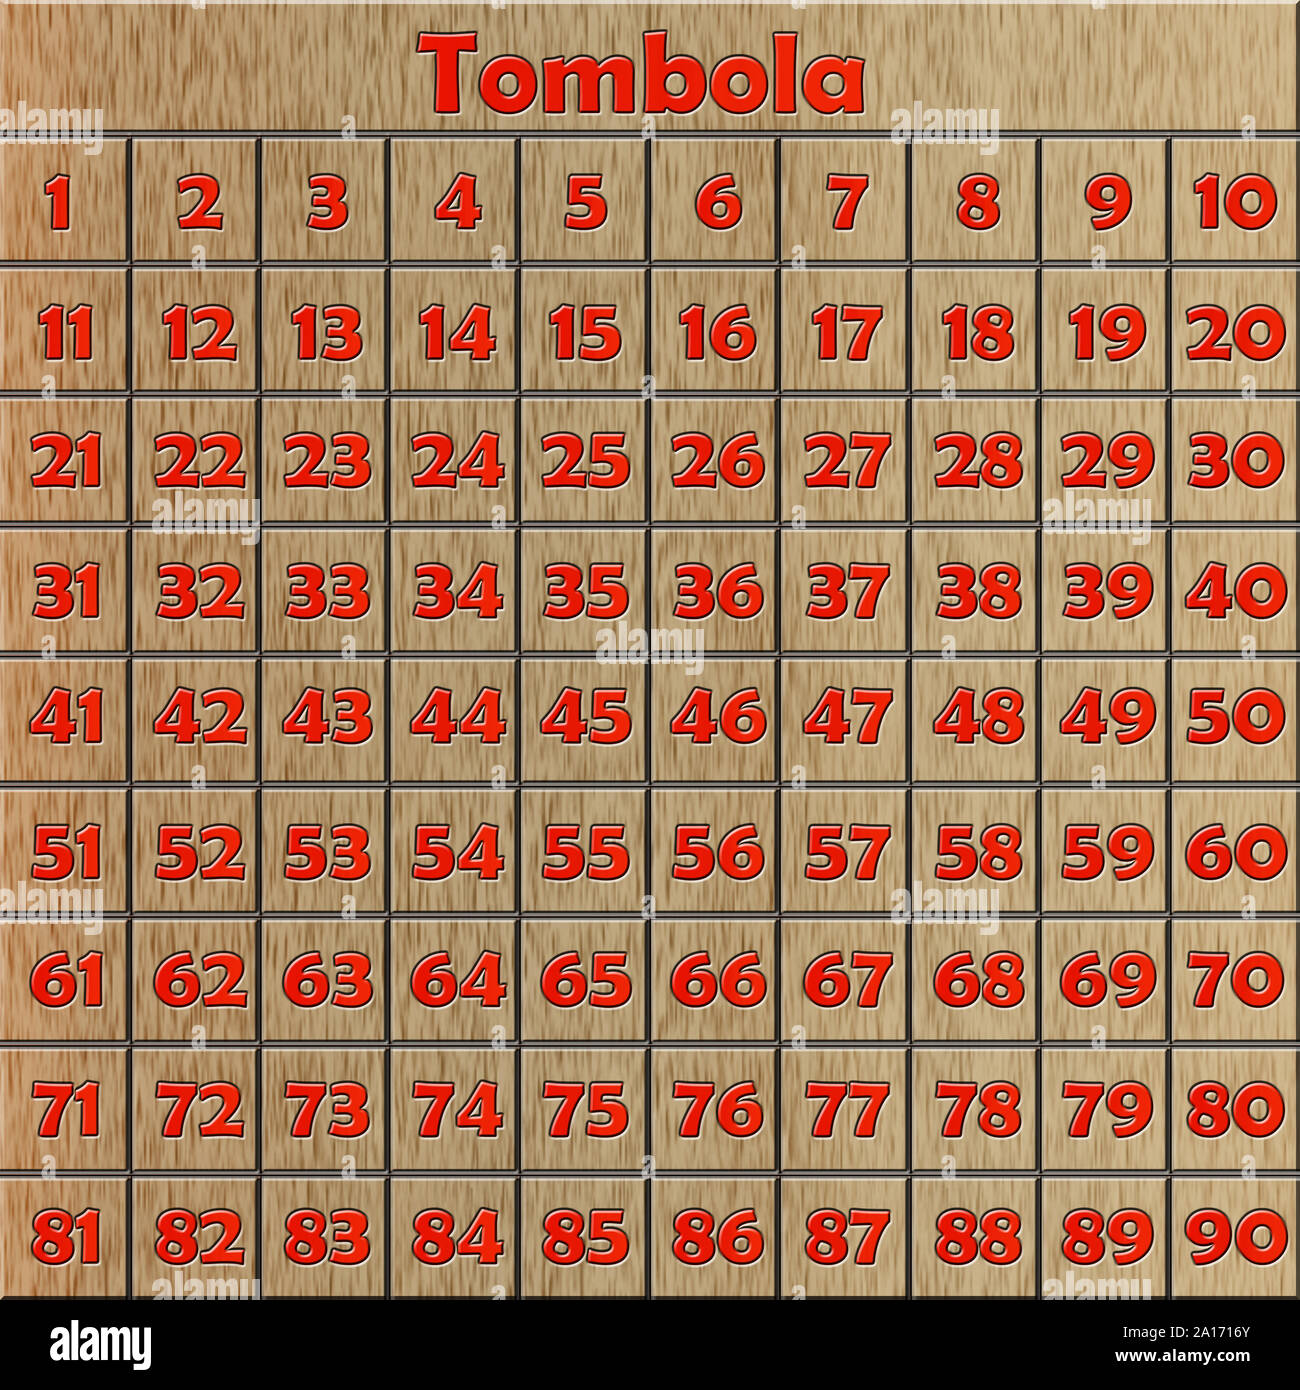 Illustration of numbered bingo board Stock Photo